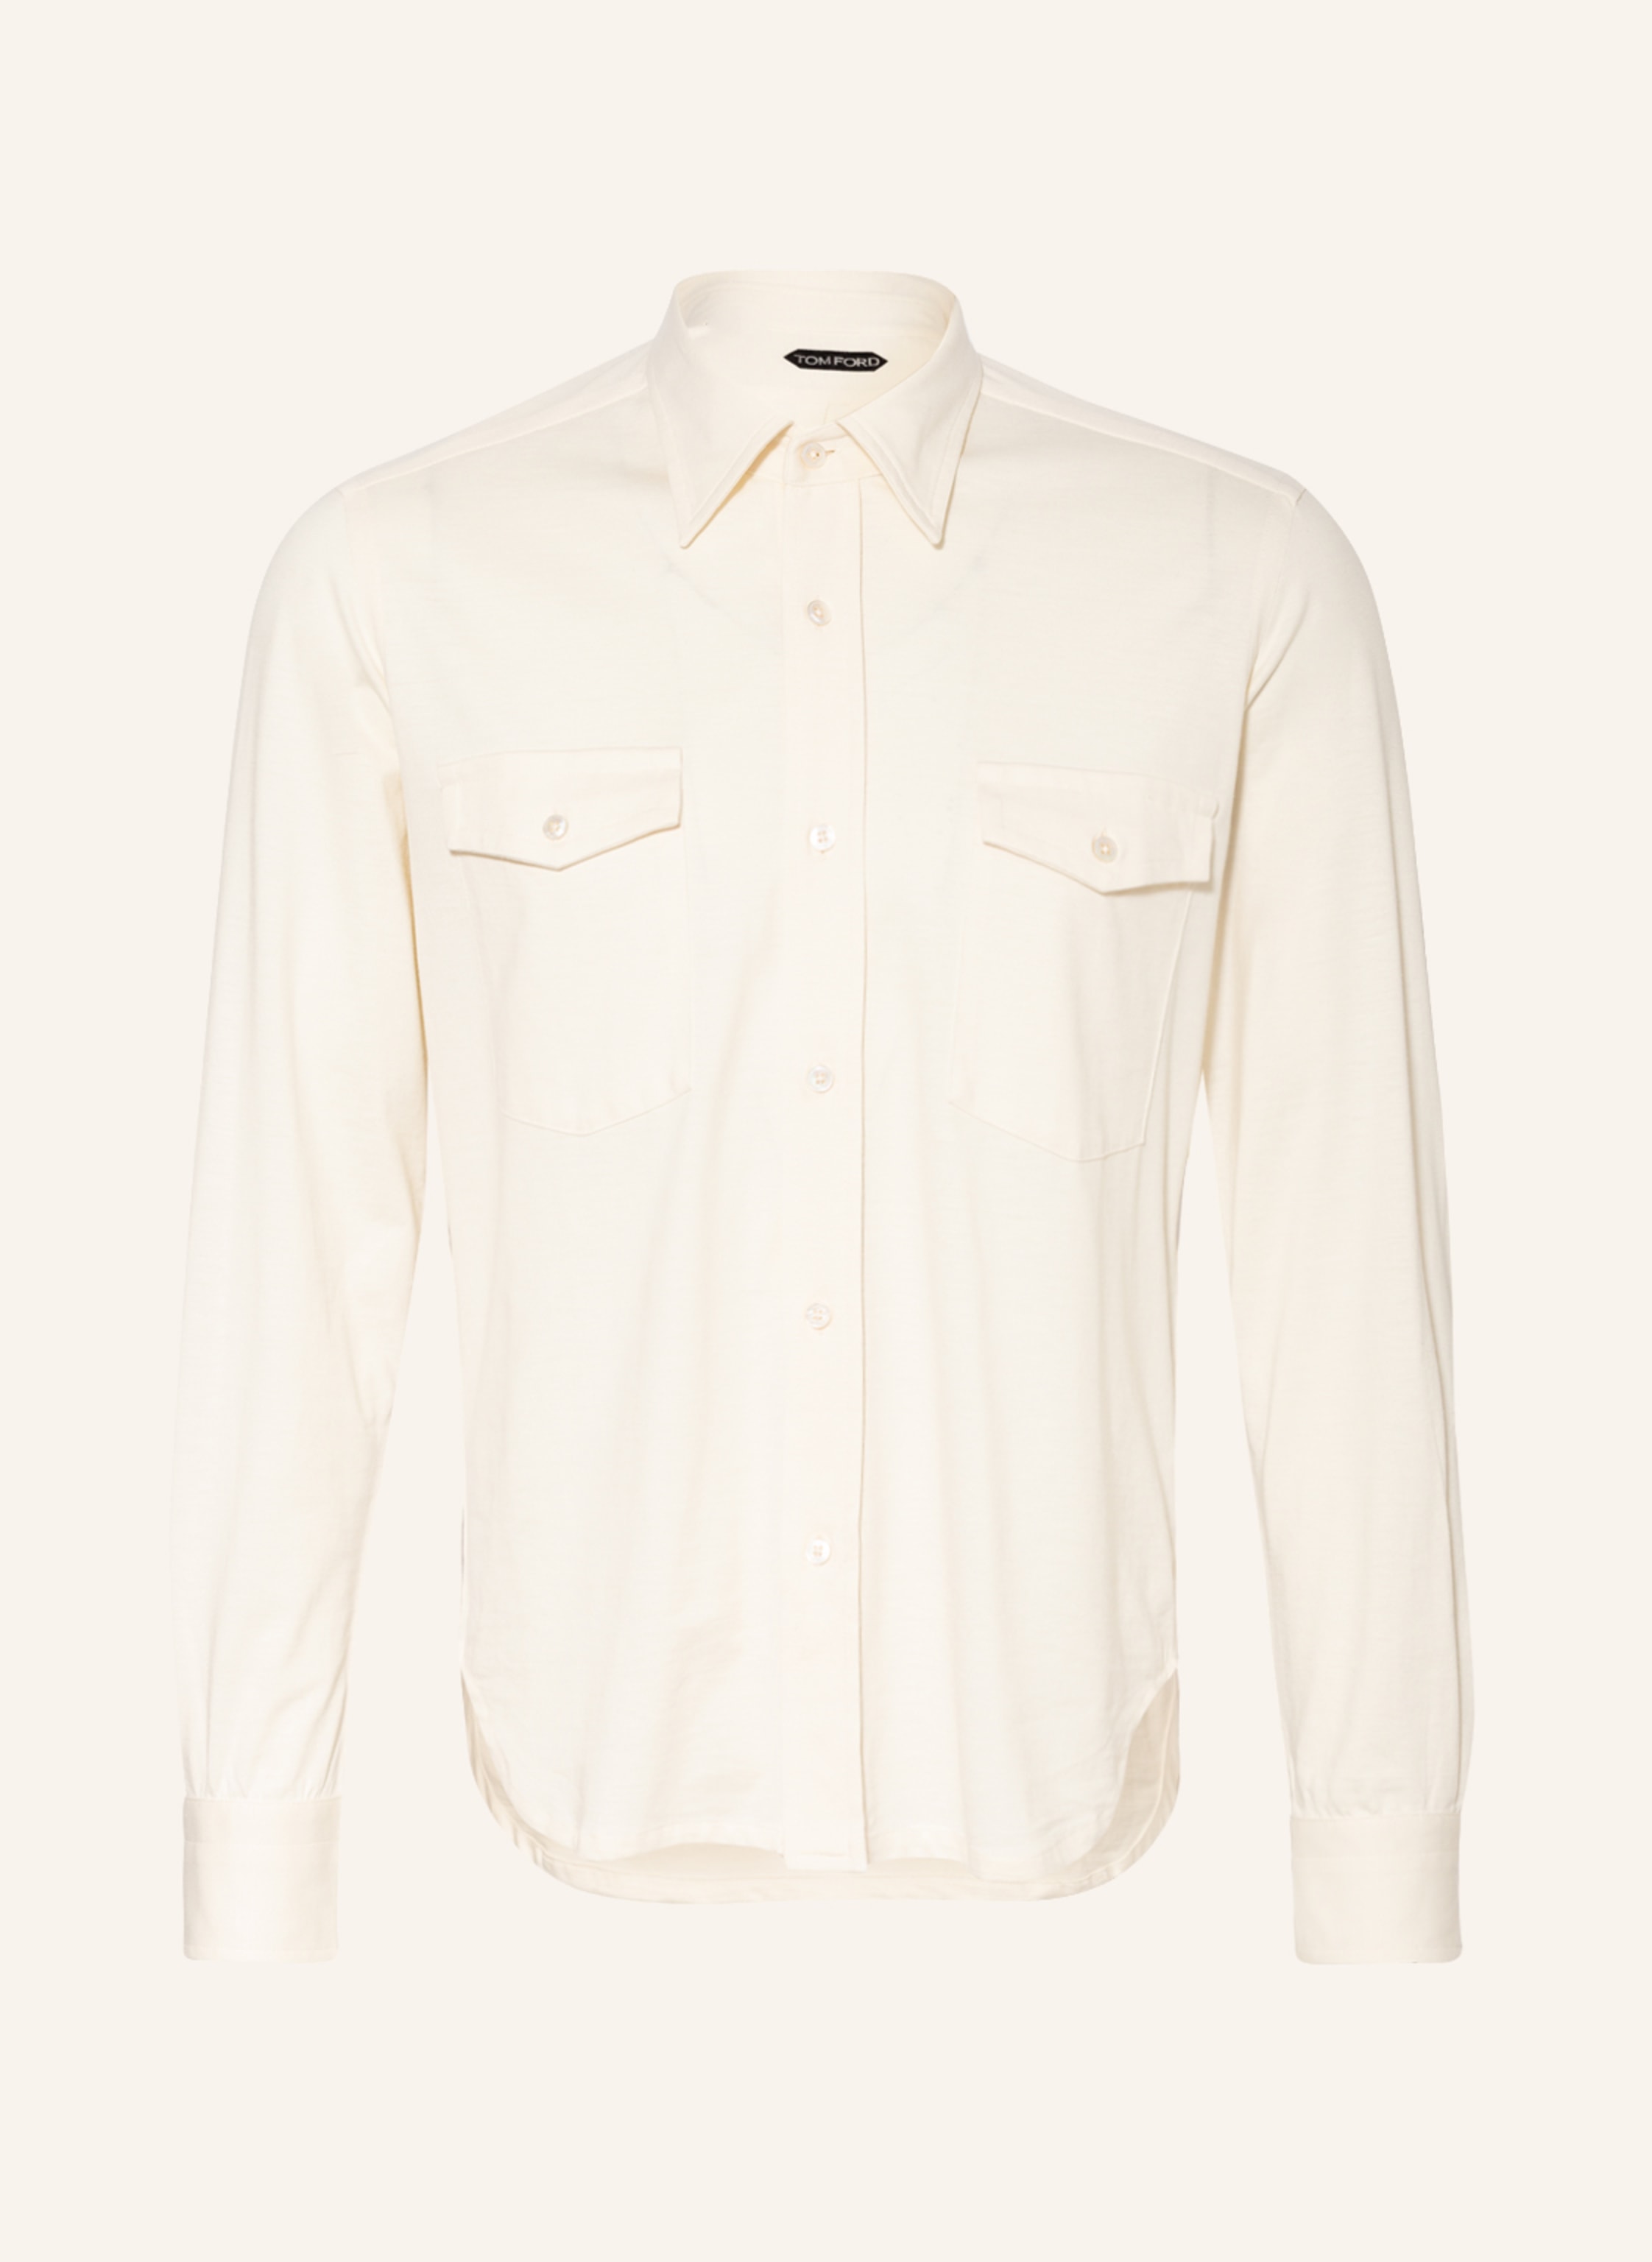 TOM FORD Jersey shirt regular fit with silk in cream | Breuninger